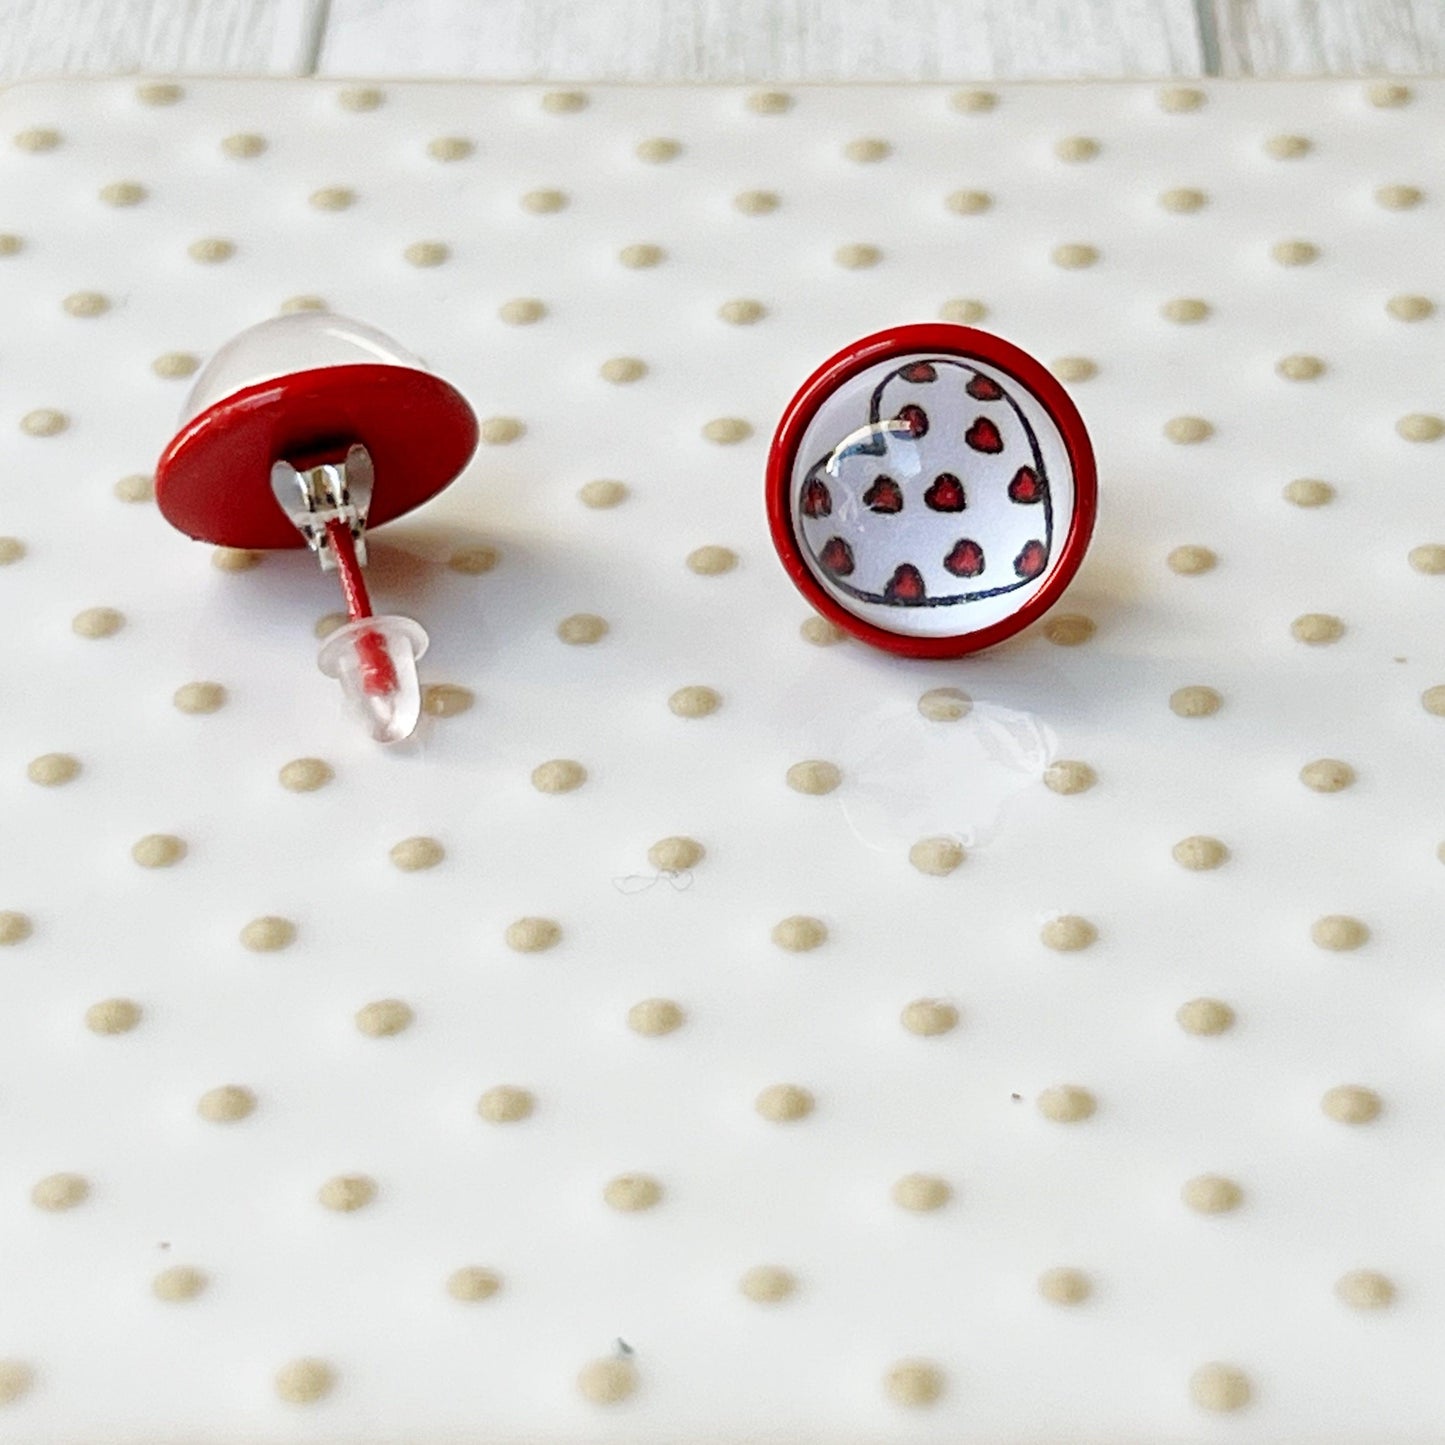 Red & White Heart Stud Earrings: Sweet & Romantic Accessories